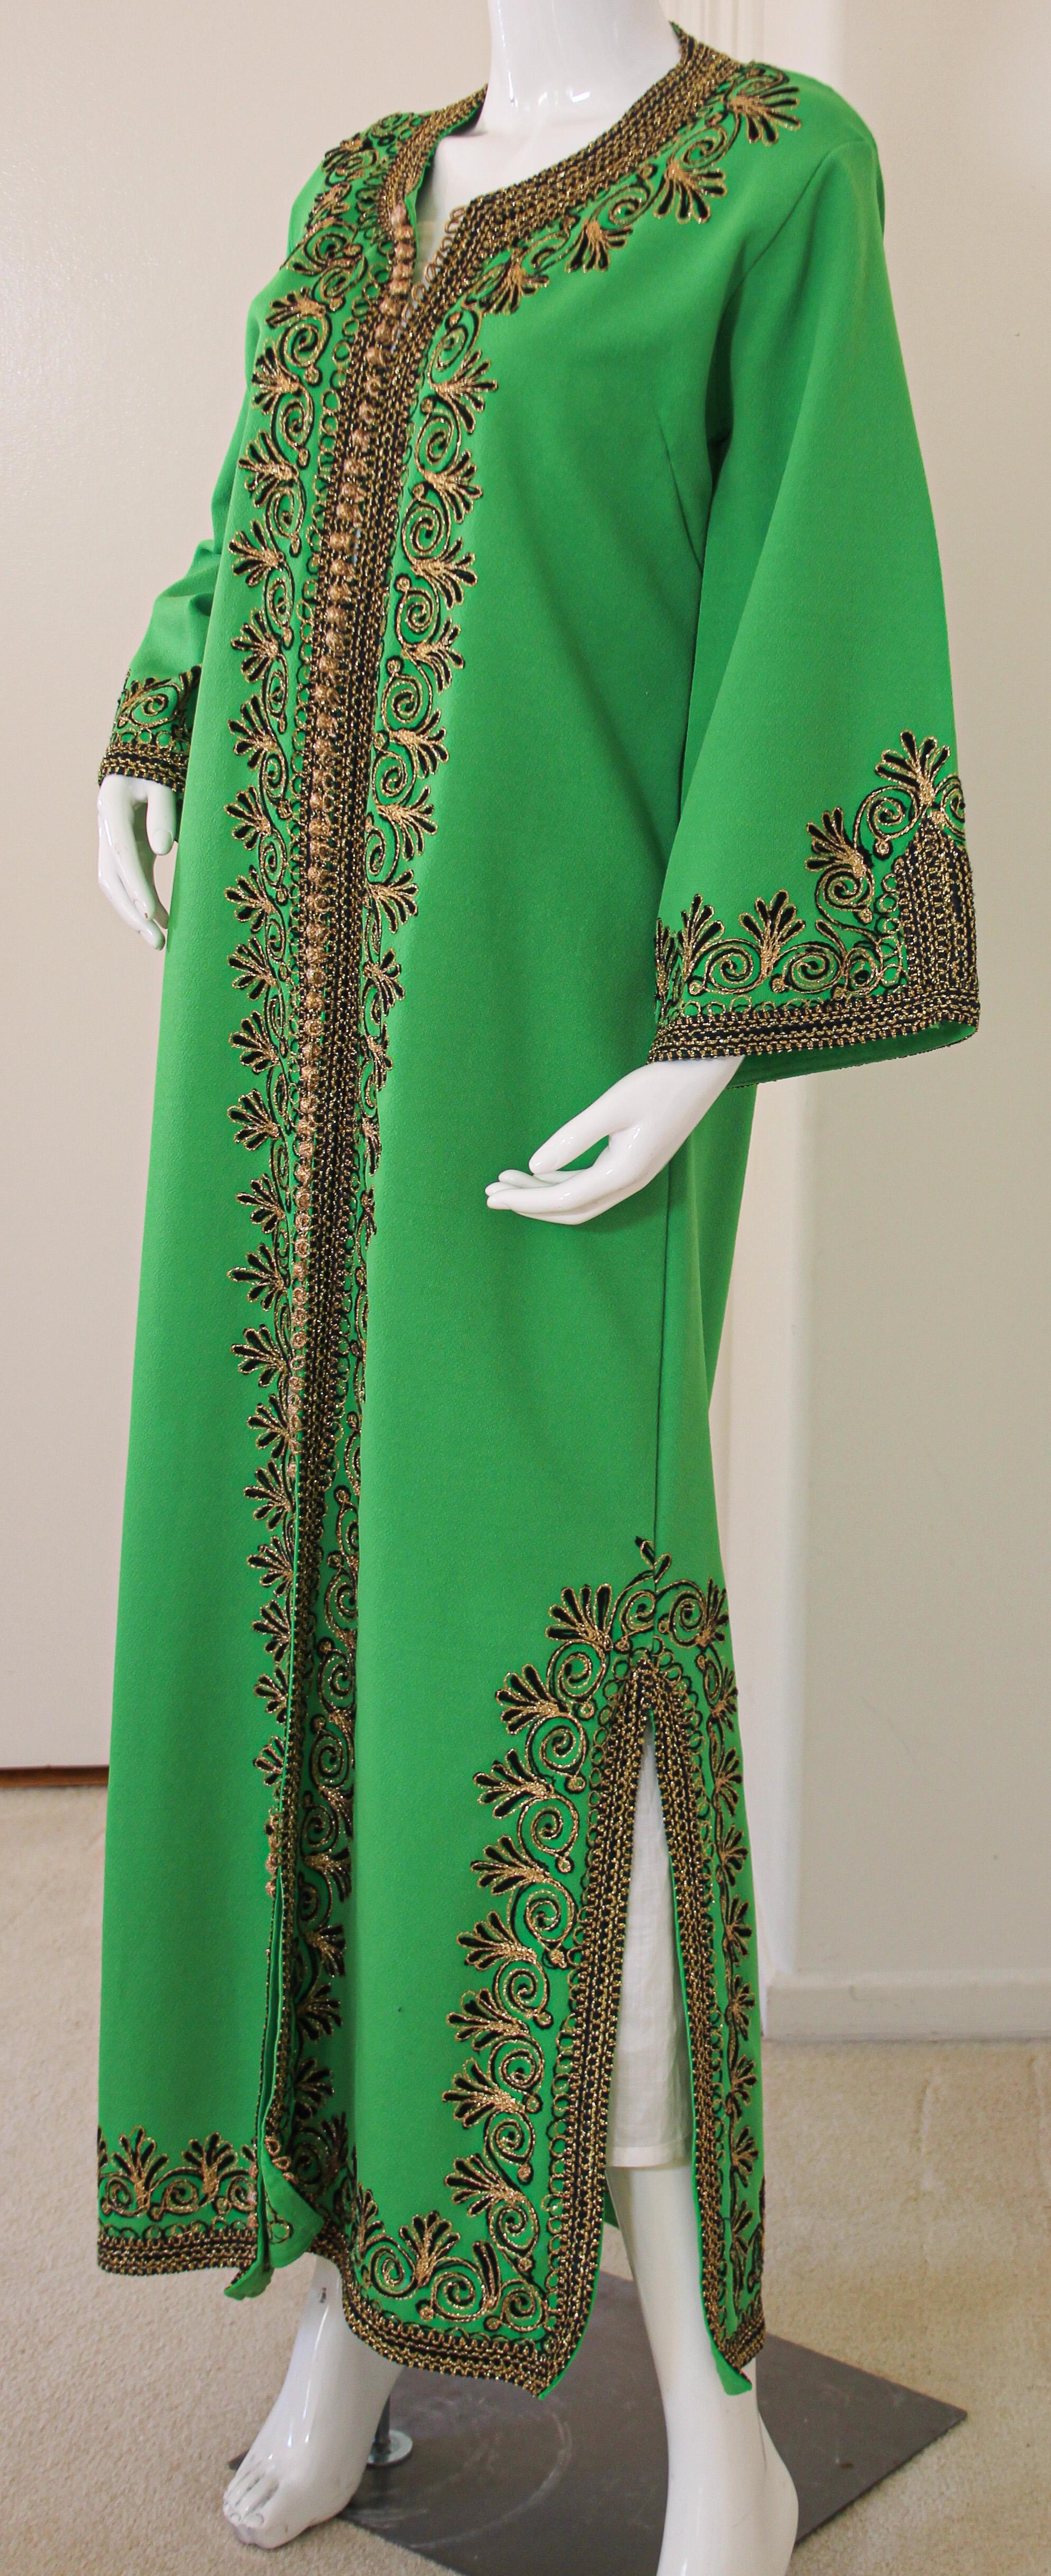 green kaftan dress